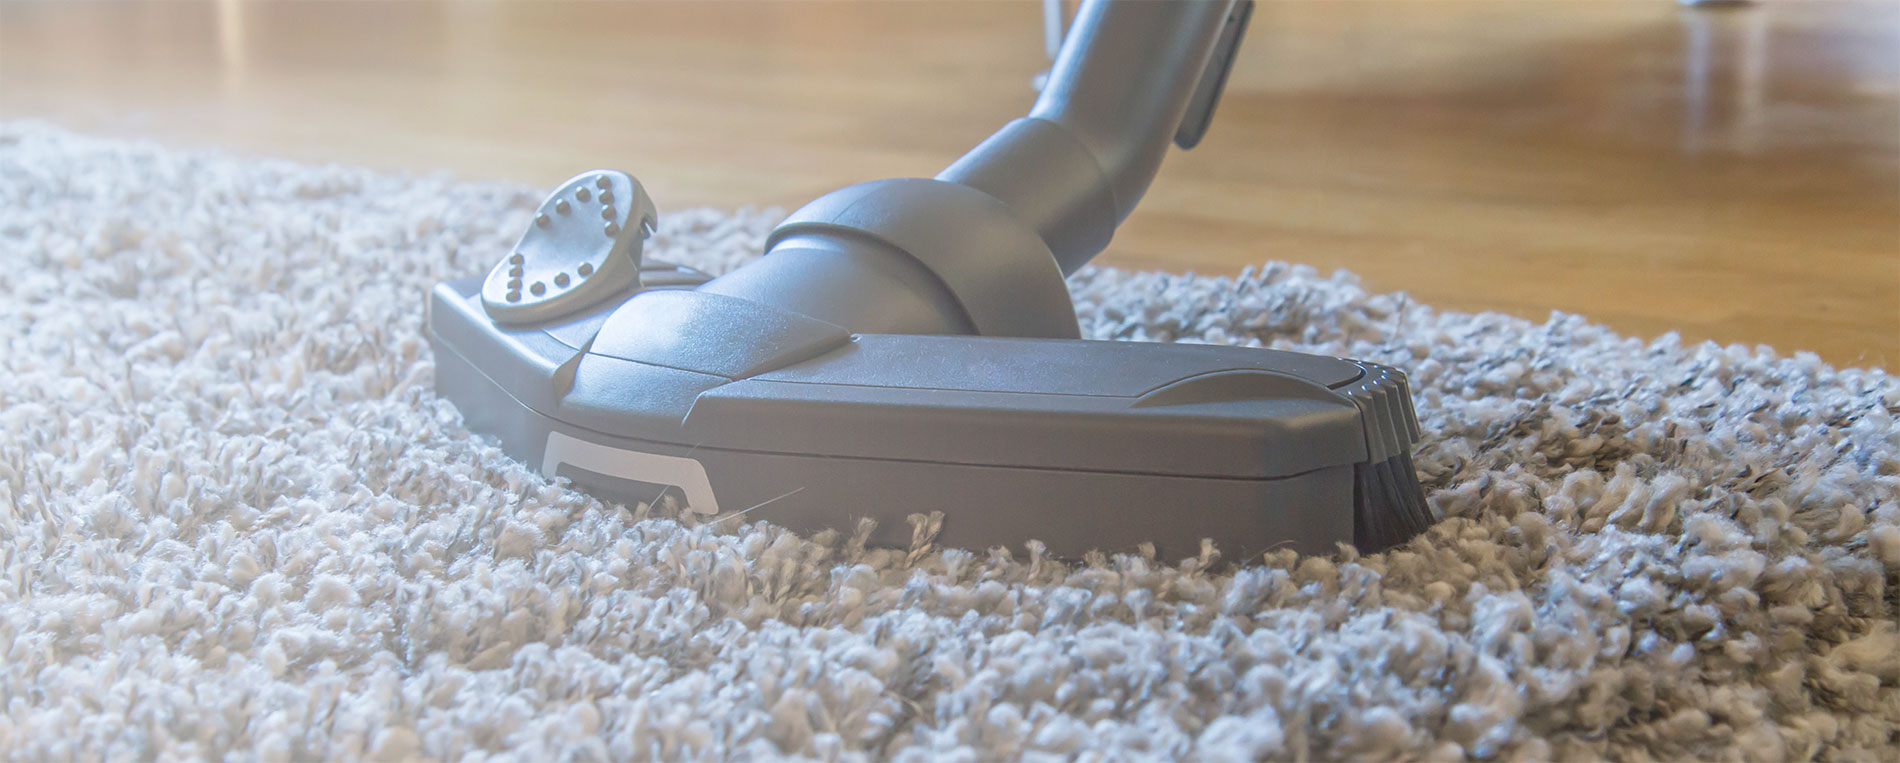 Extending the Lifespan of Your Carpet Through Proper Maintenance